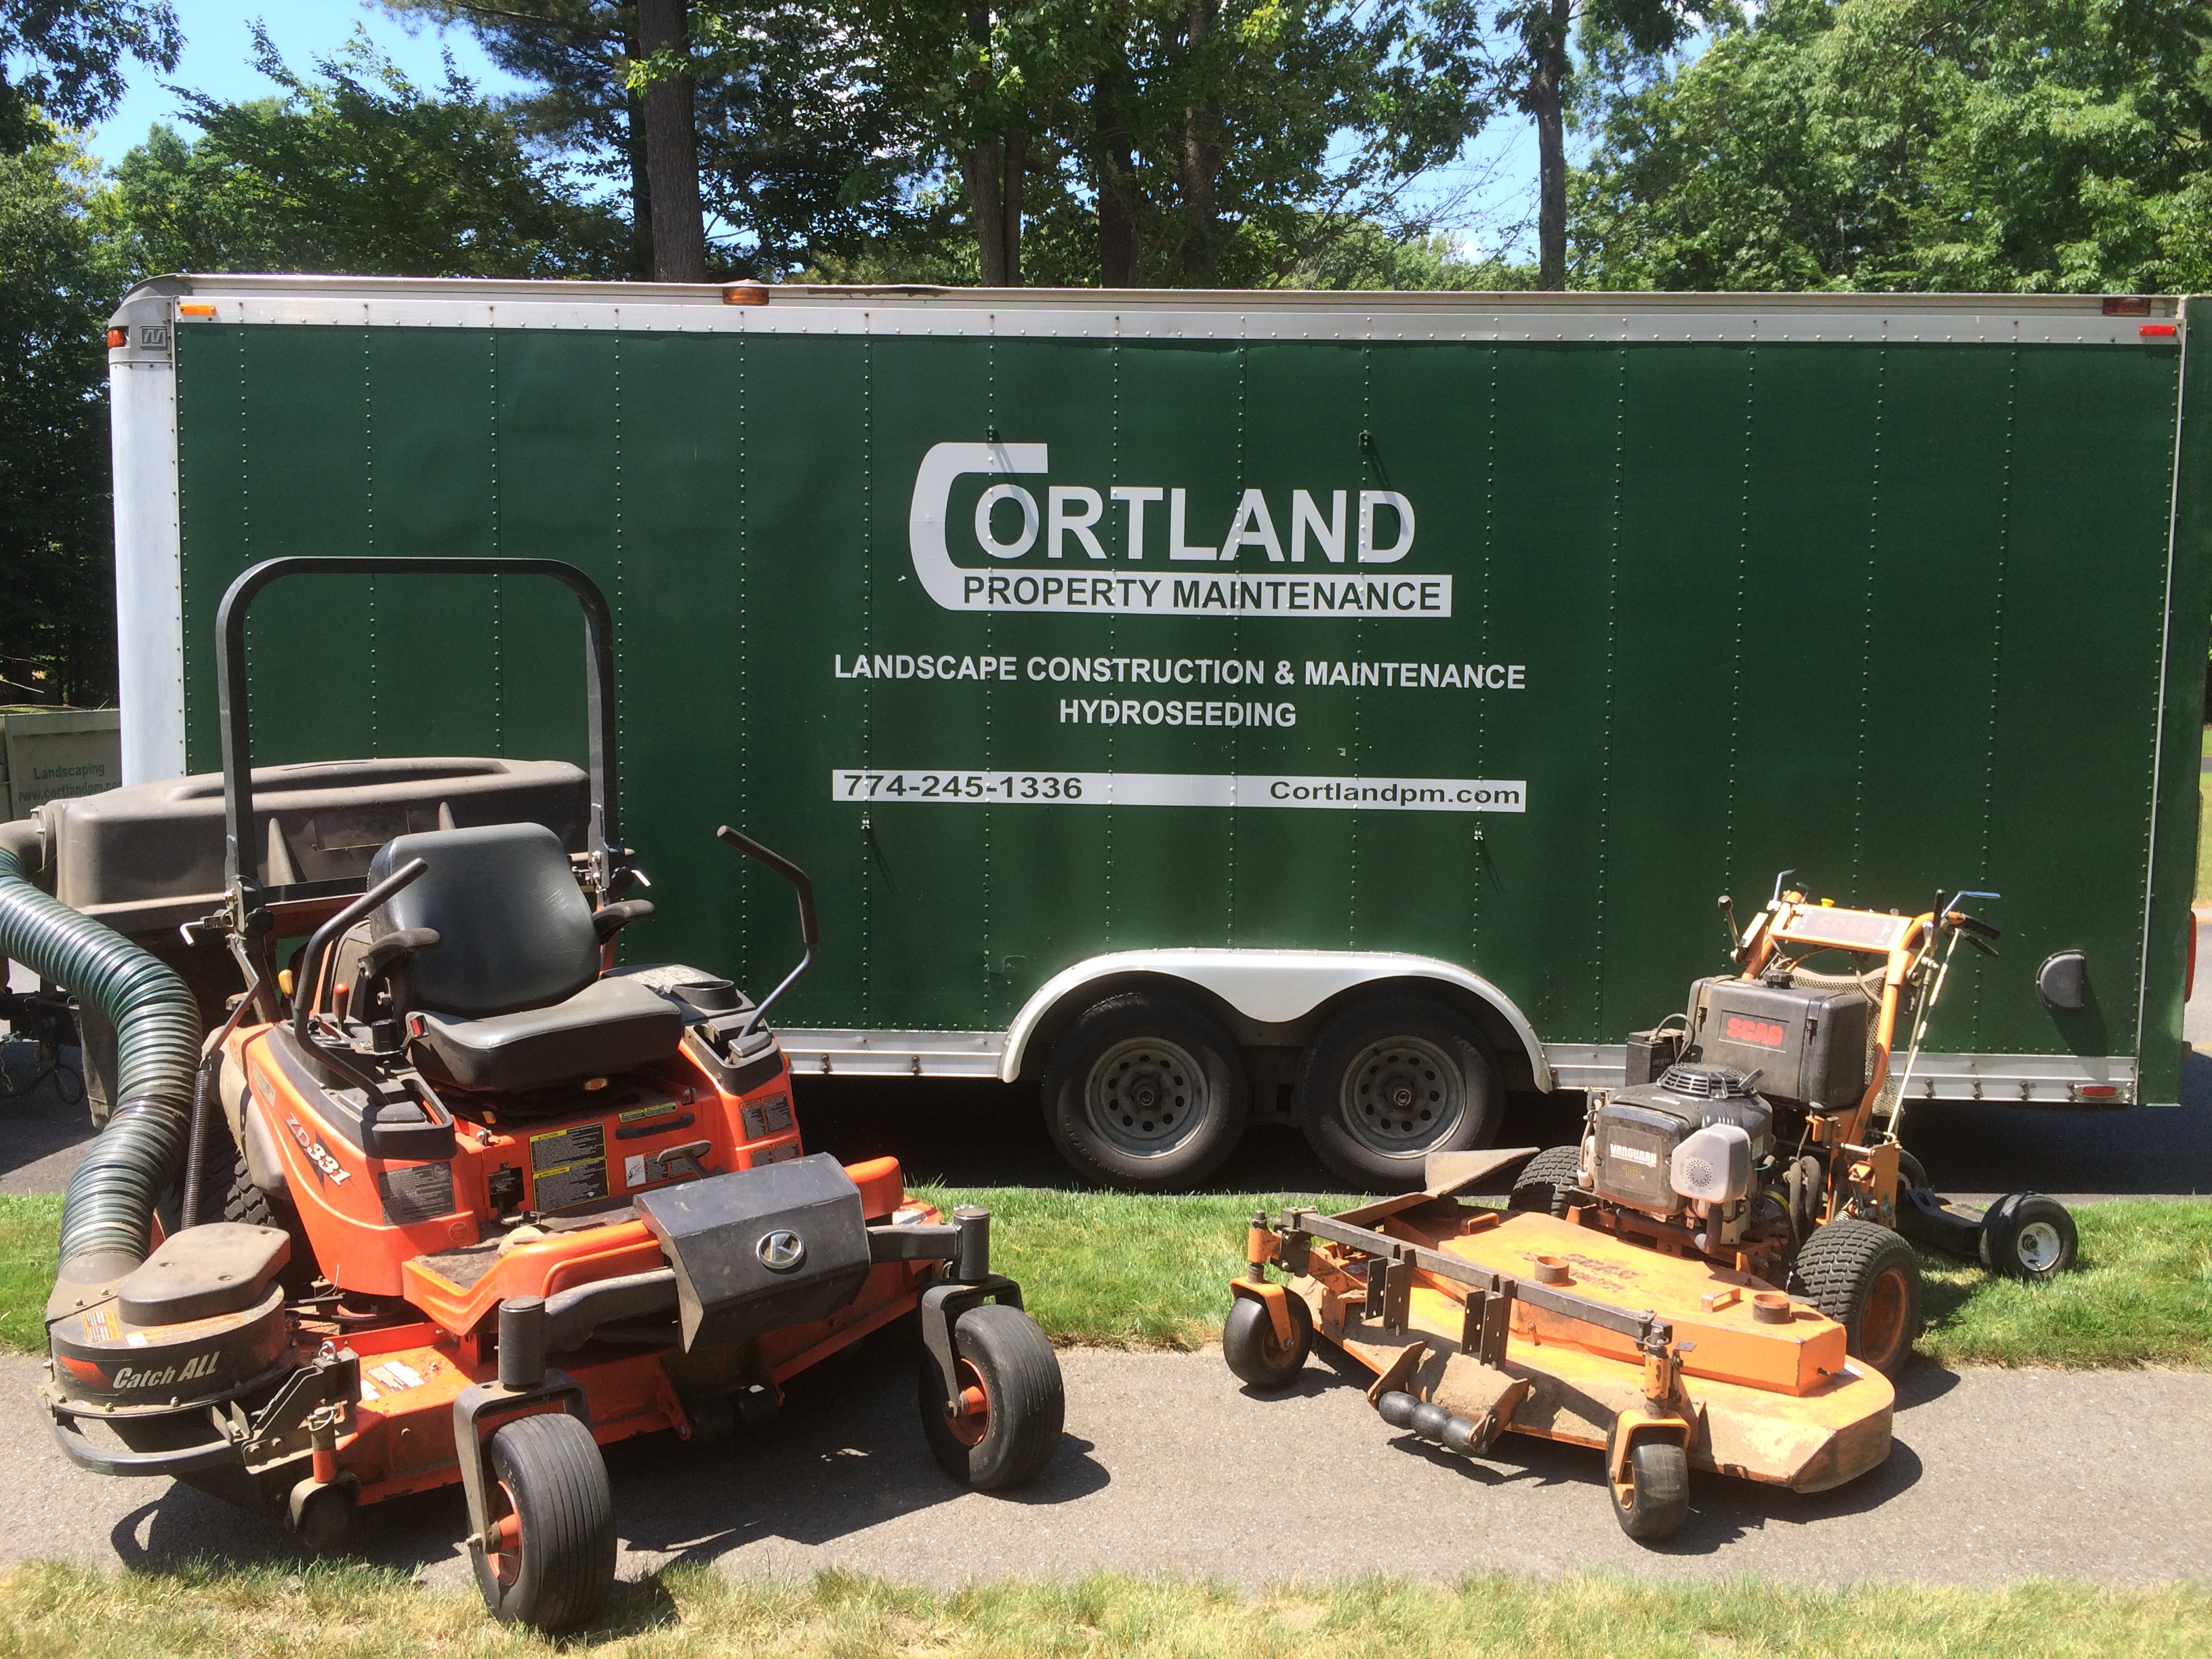 Lawn Maintenance equipment for Cortland Property Maintenance.